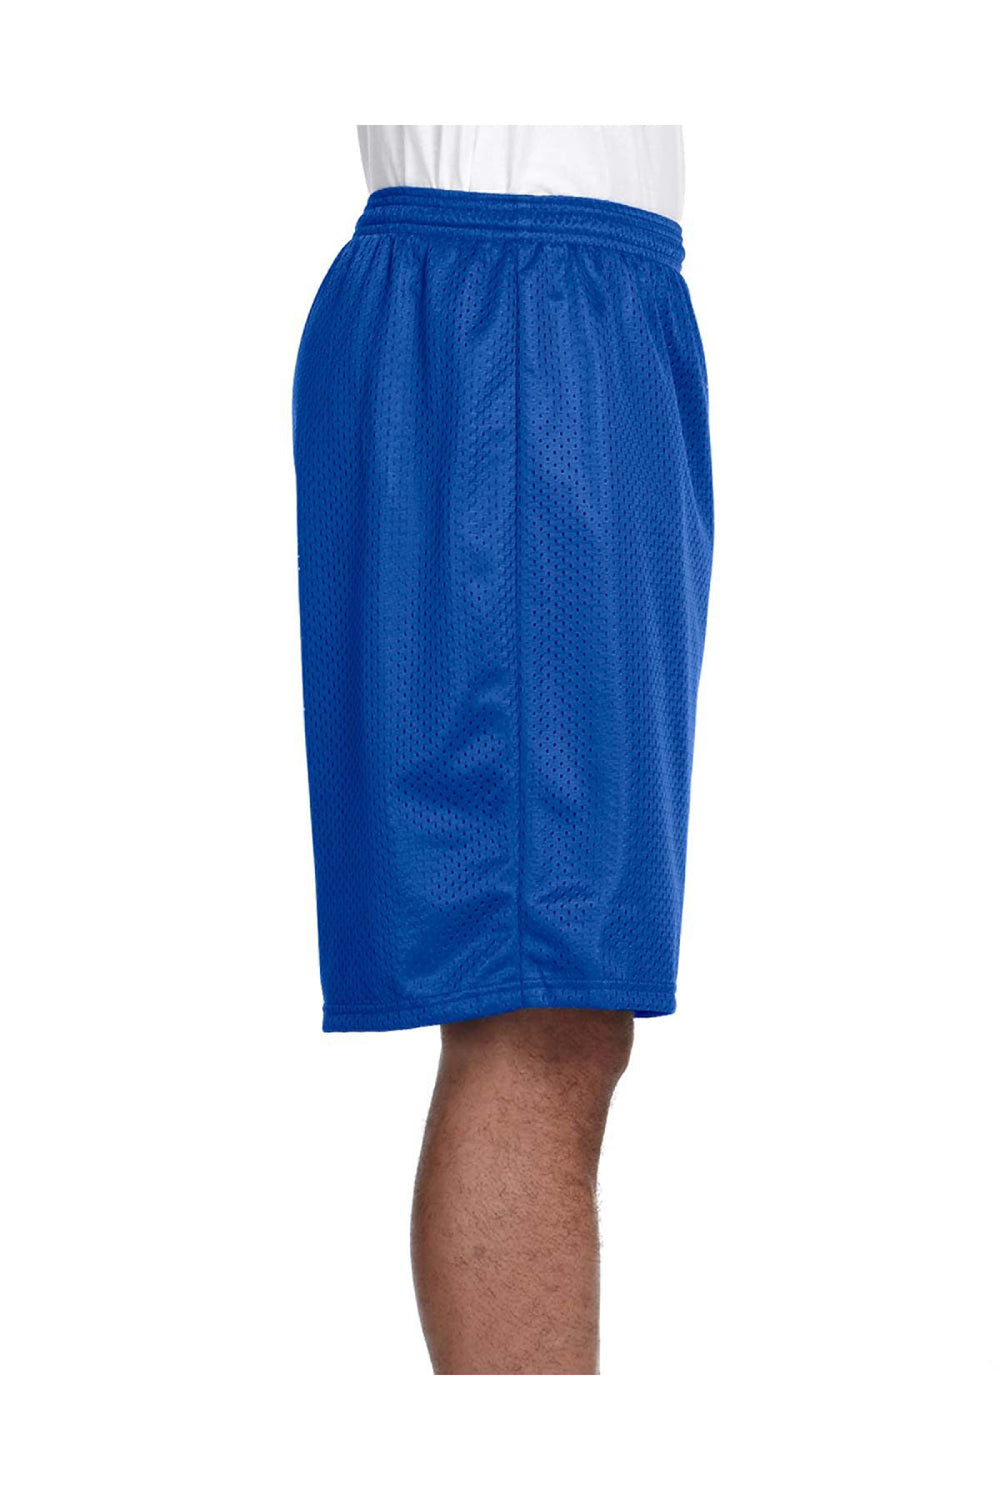 A4 N5296 Mens Moisture Wicking Tricot Mesh Shorts Royal Blue Model Side